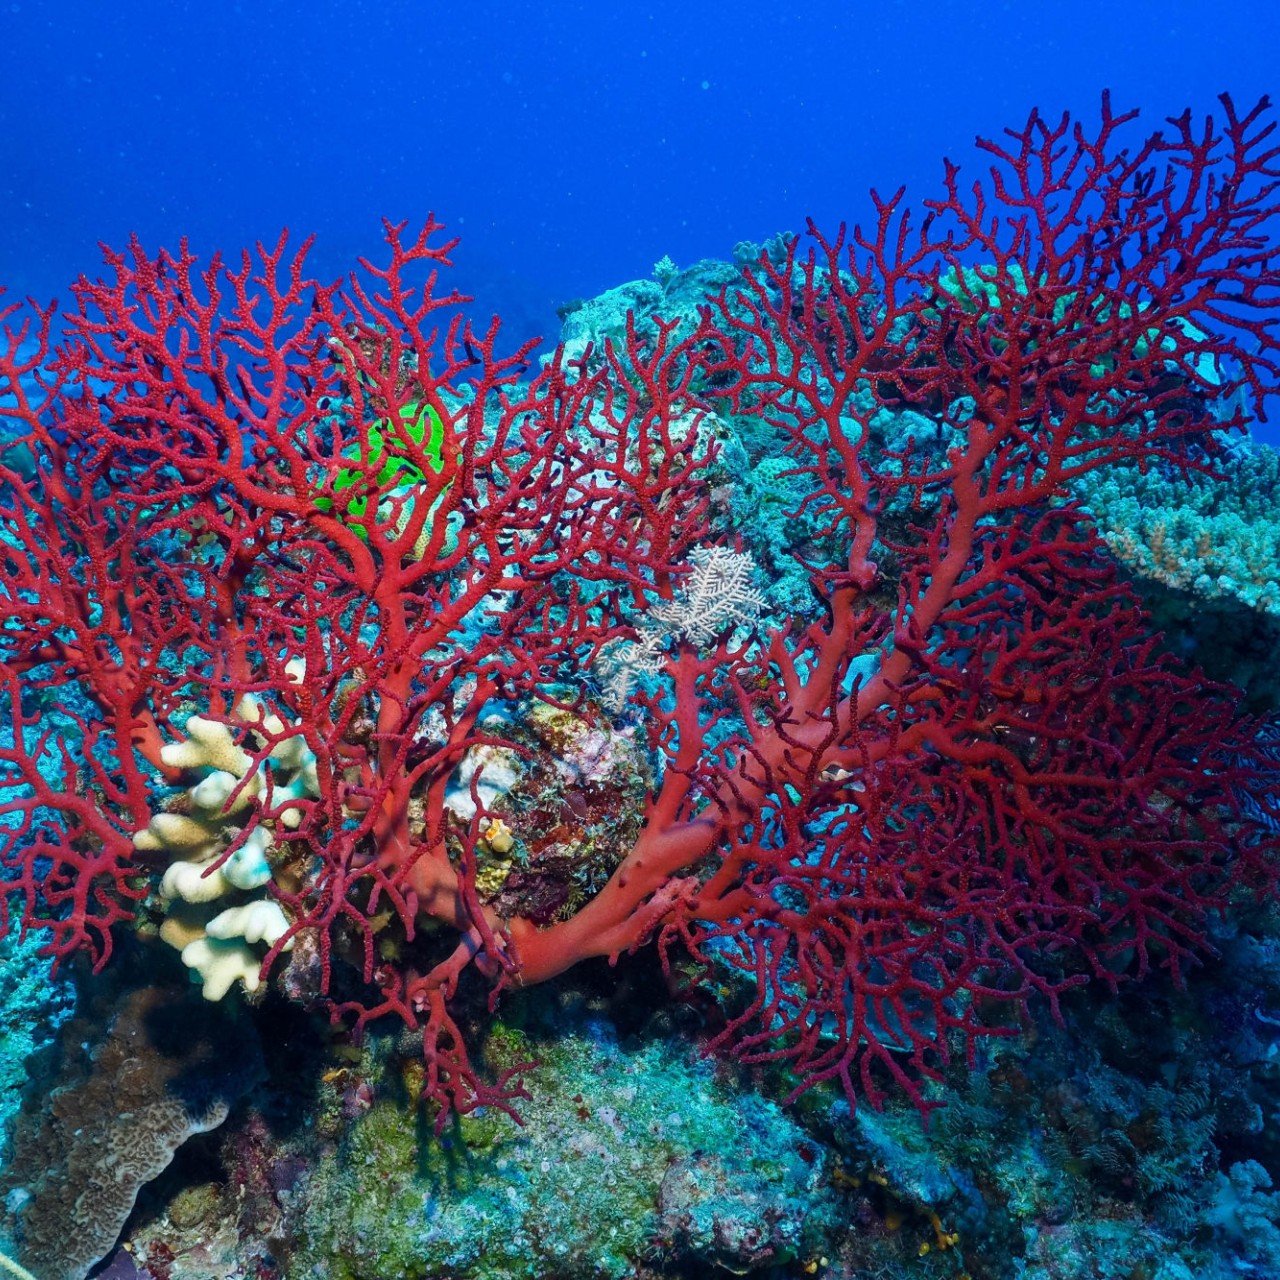 Coral video. Риф Туббатаха Филиппины. Коралловый риф Туббатаха. Большой Барьерный риф коралловые полипы. Шестилучевые коралловые полипы.